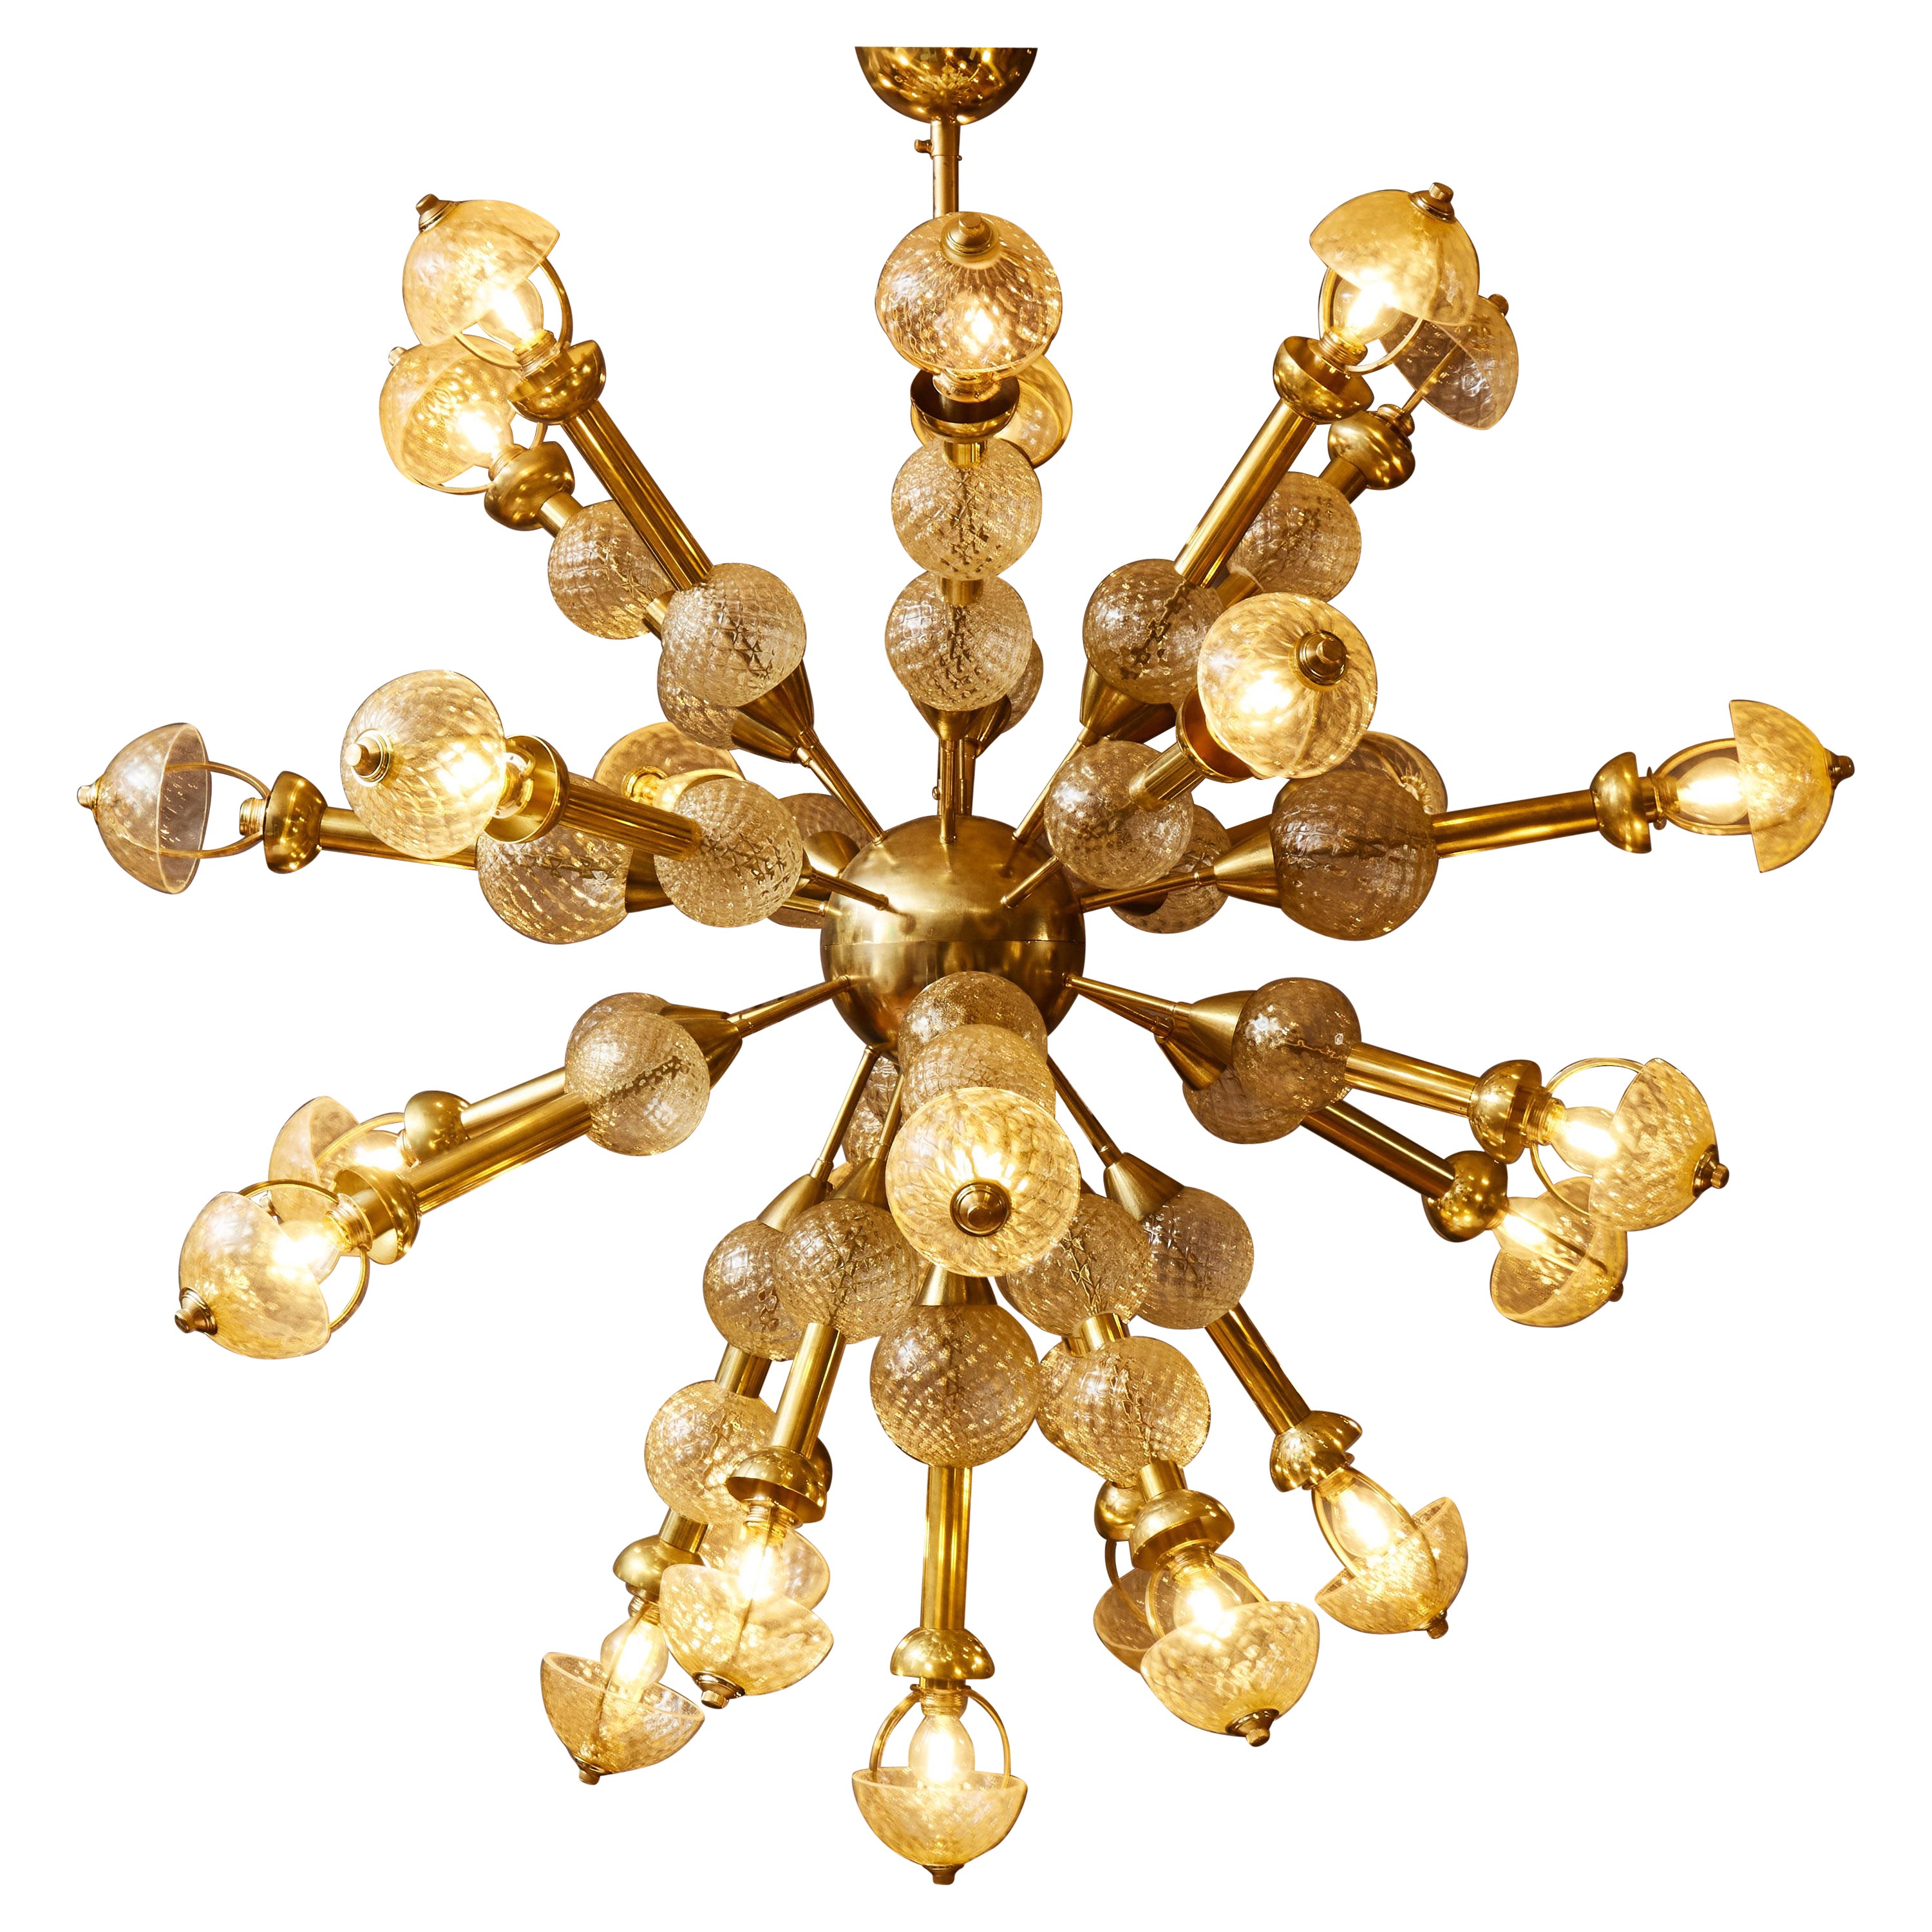 Sputnik chandelier in Murano glass by Studio Glustin